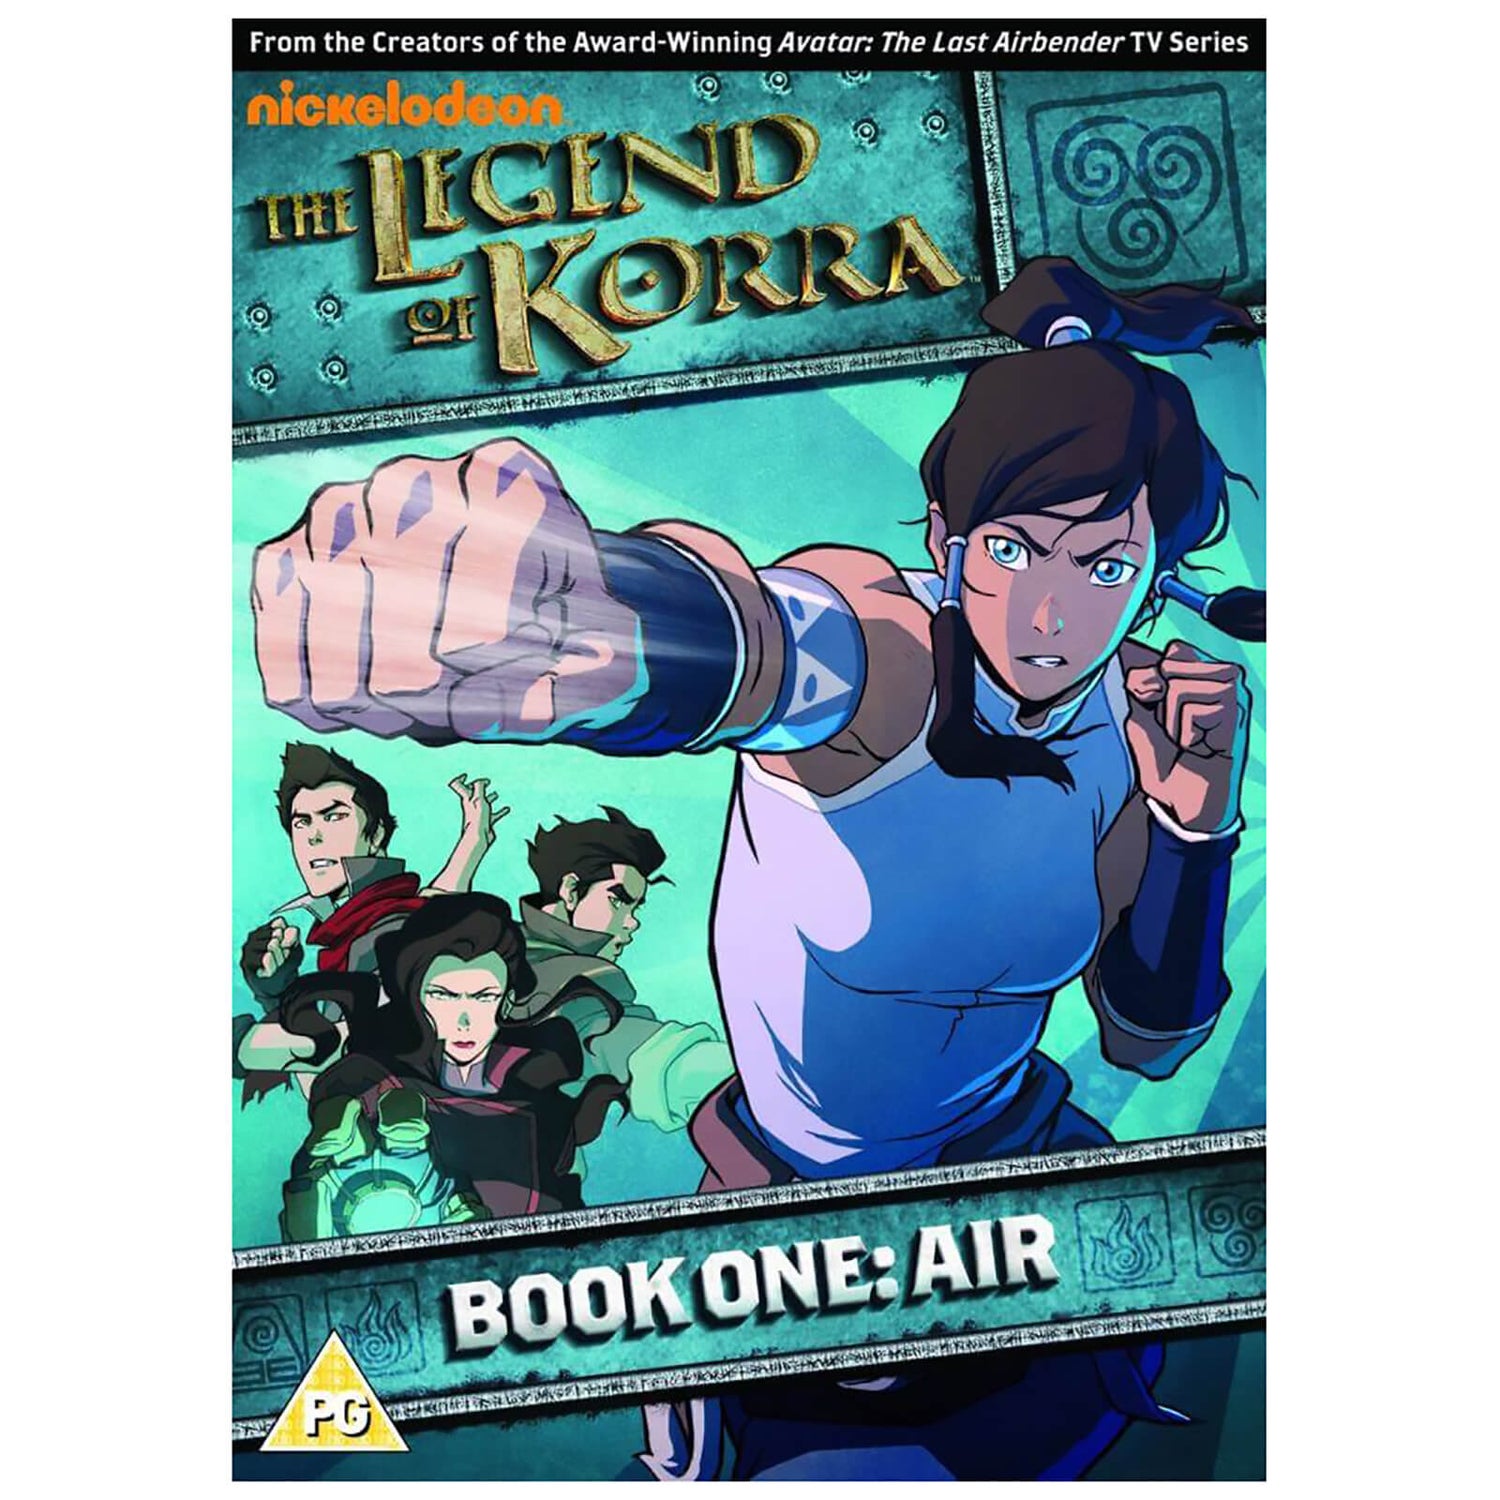 Legend of Korra: Book One - Air